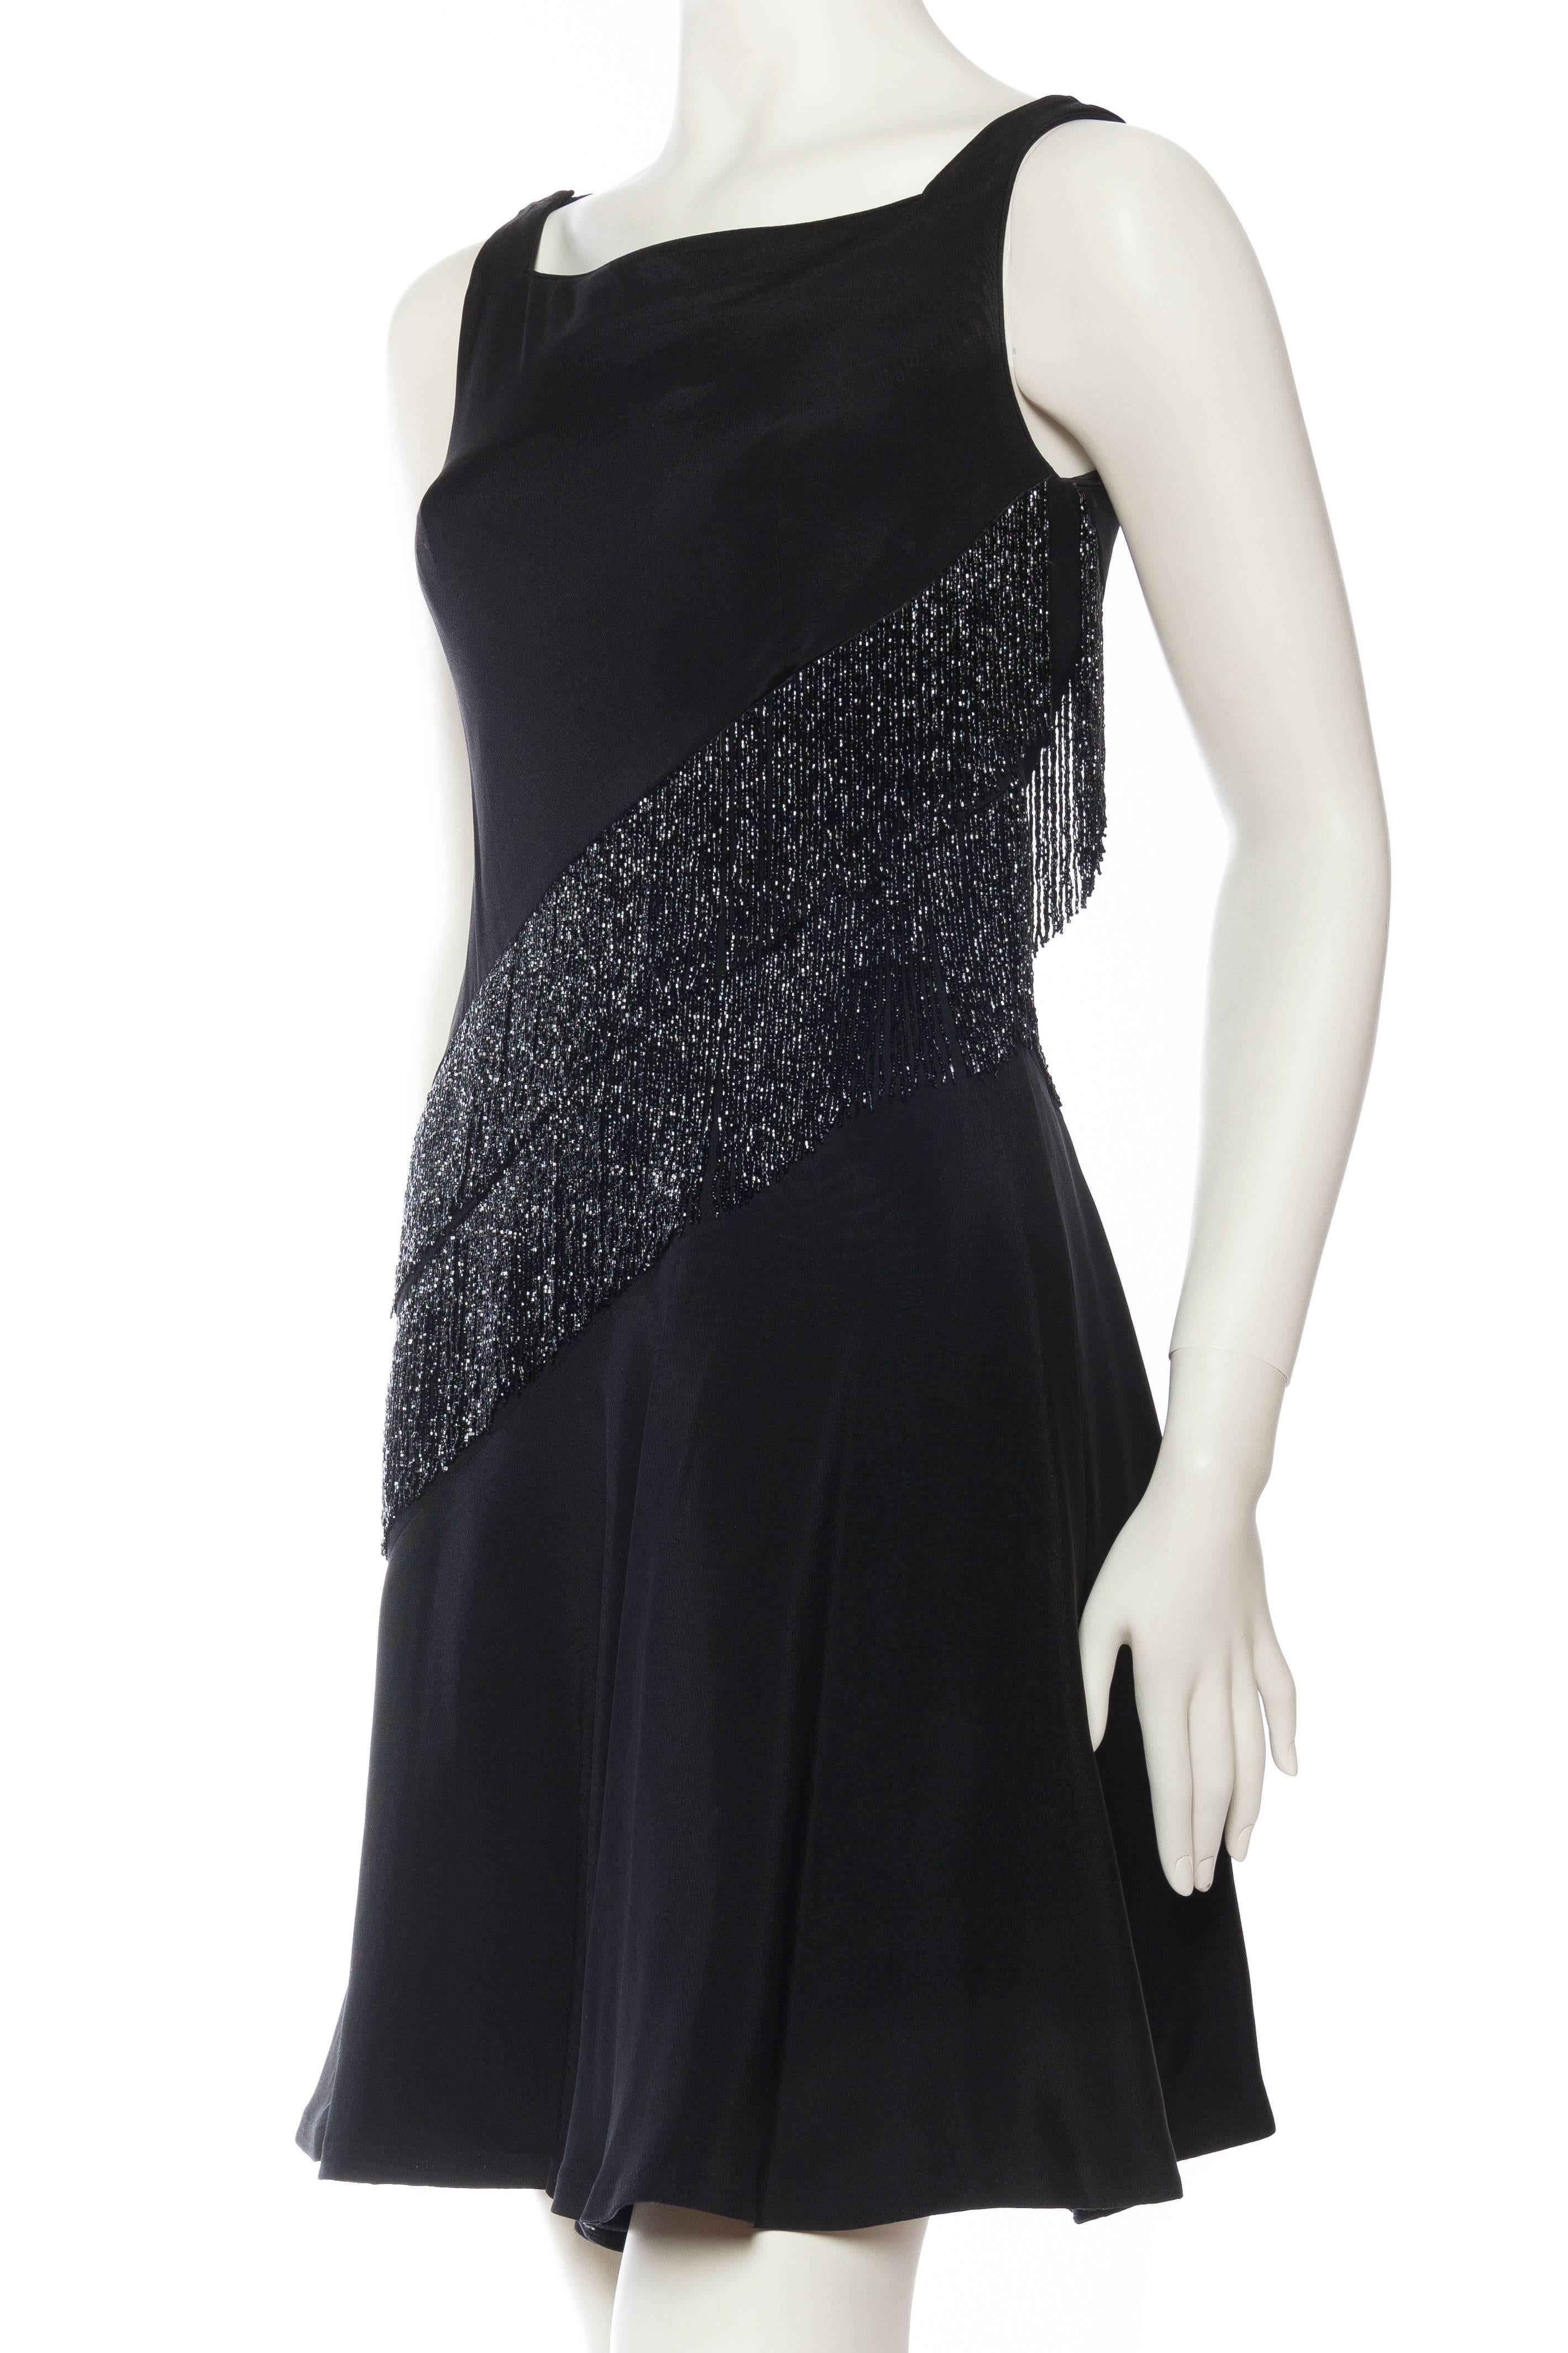 1960S MR BLACKWELL Black Silk Faille Bias Beaded Fringe Mod Cocktail Dress For Sale 2